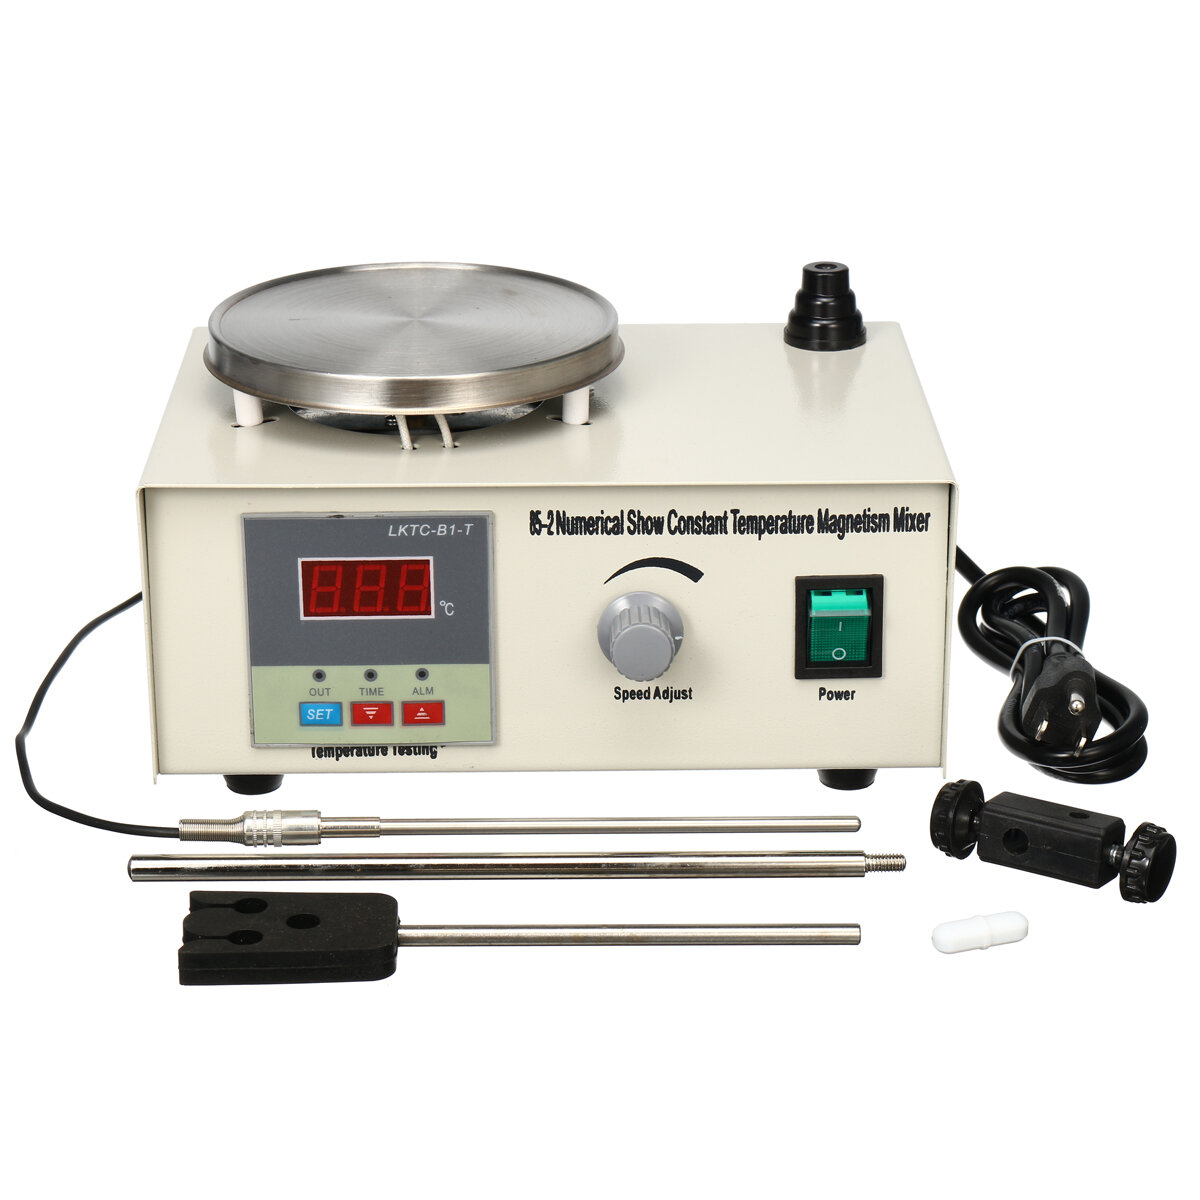 

300W 220V Laboratory Lab Magnetic Stirrer Heating Plate Hotplate Mixer Equipment